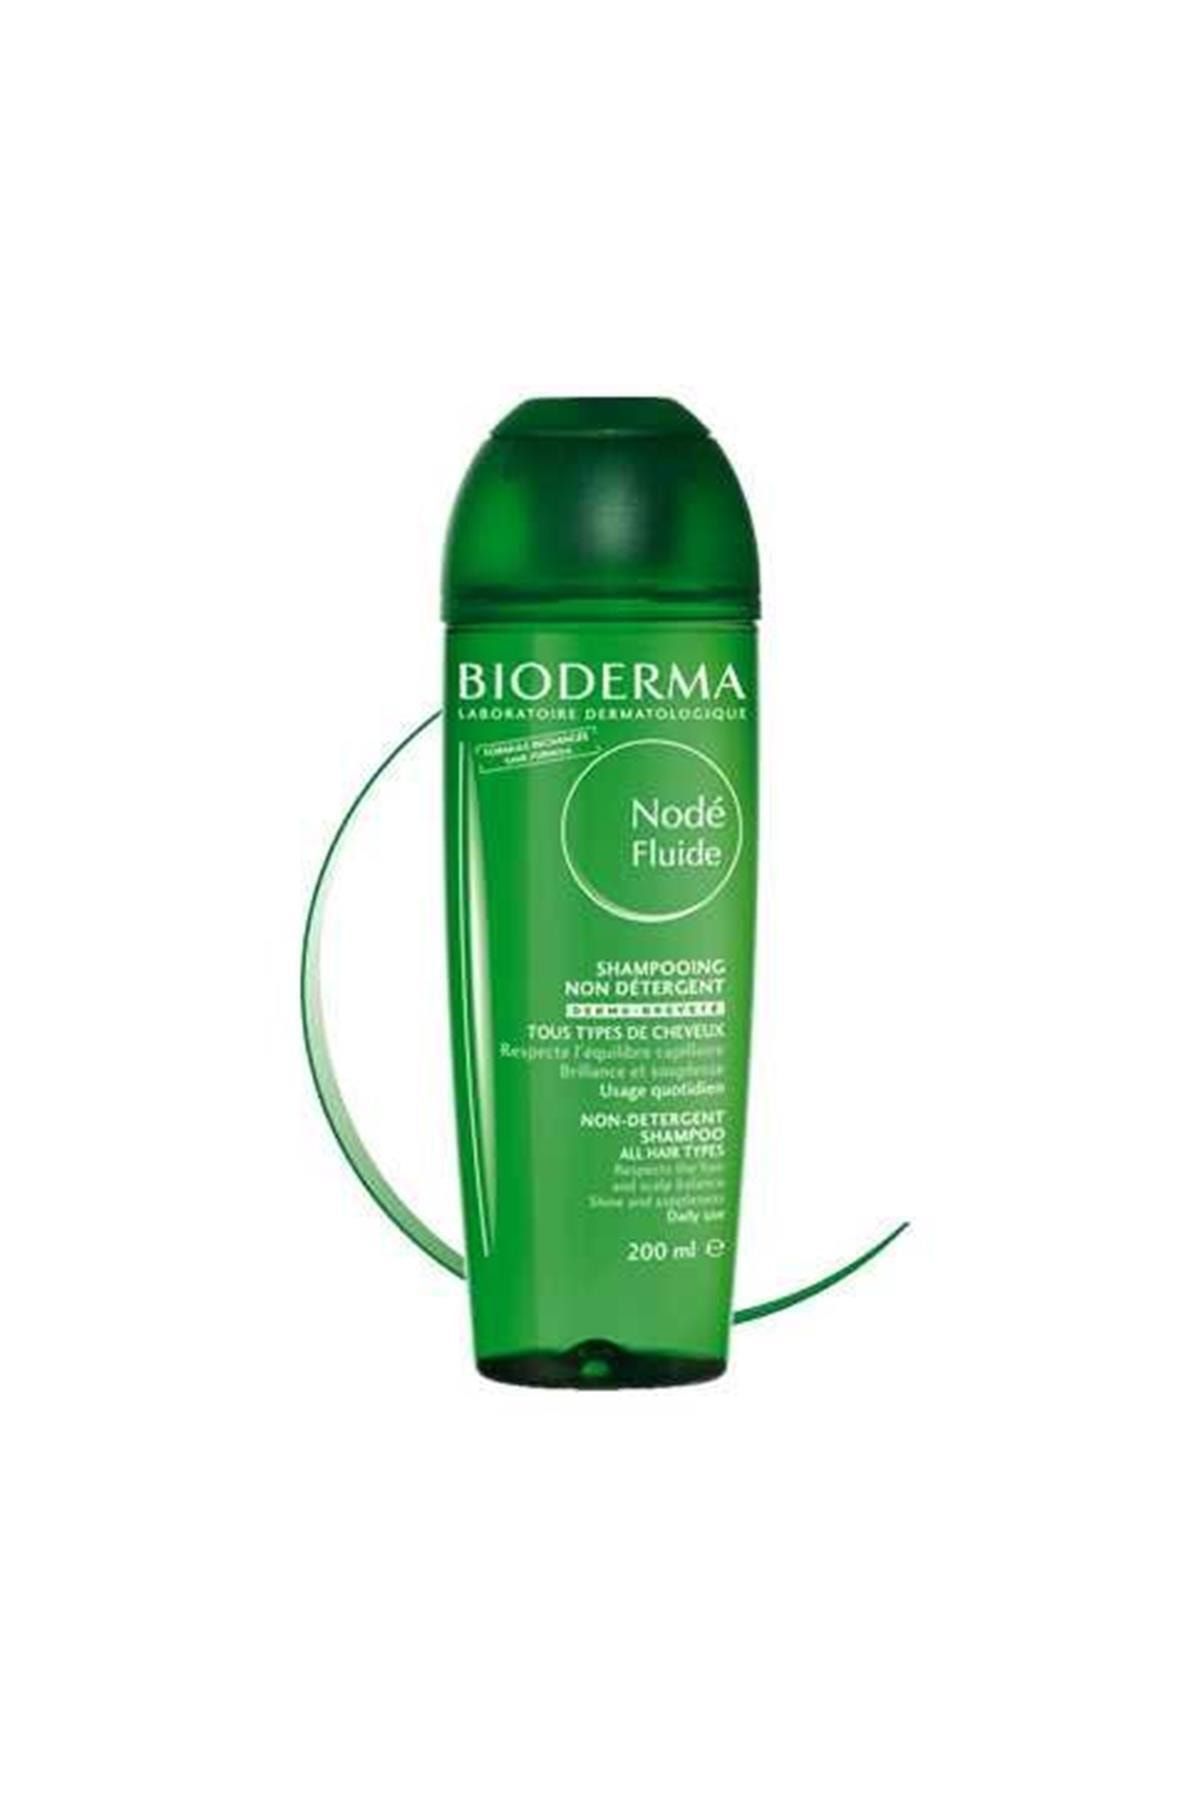 Bioderma Bıoderma Node Fluid Shampoo 200 ml Sgonkozd16137